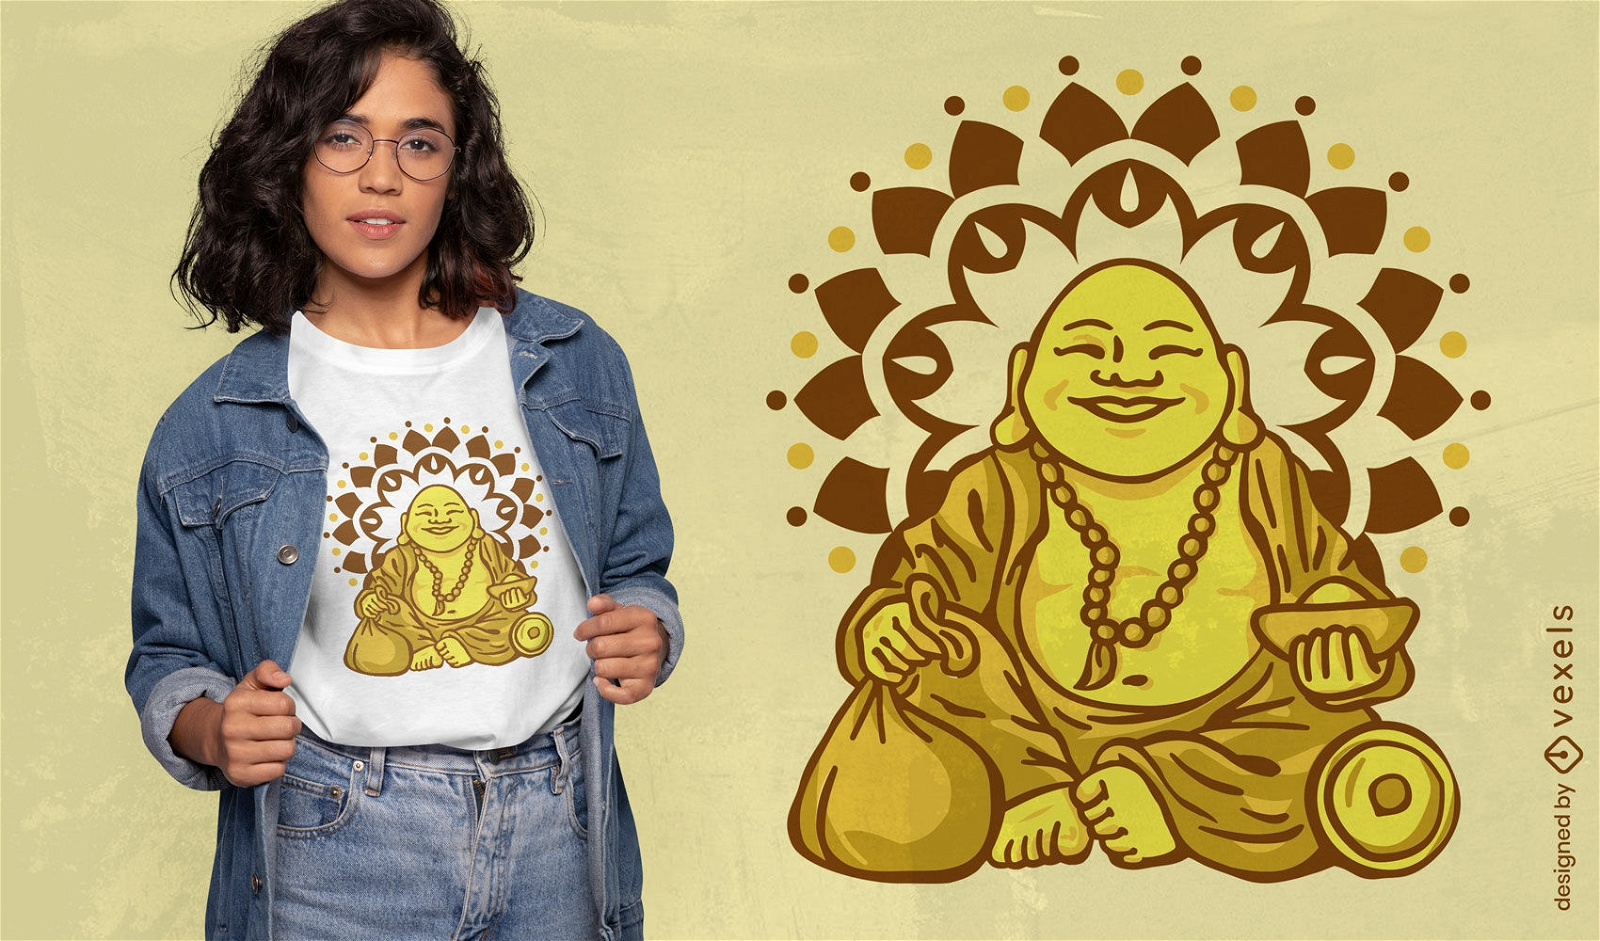 Adorable gold Buddha t-shirt design